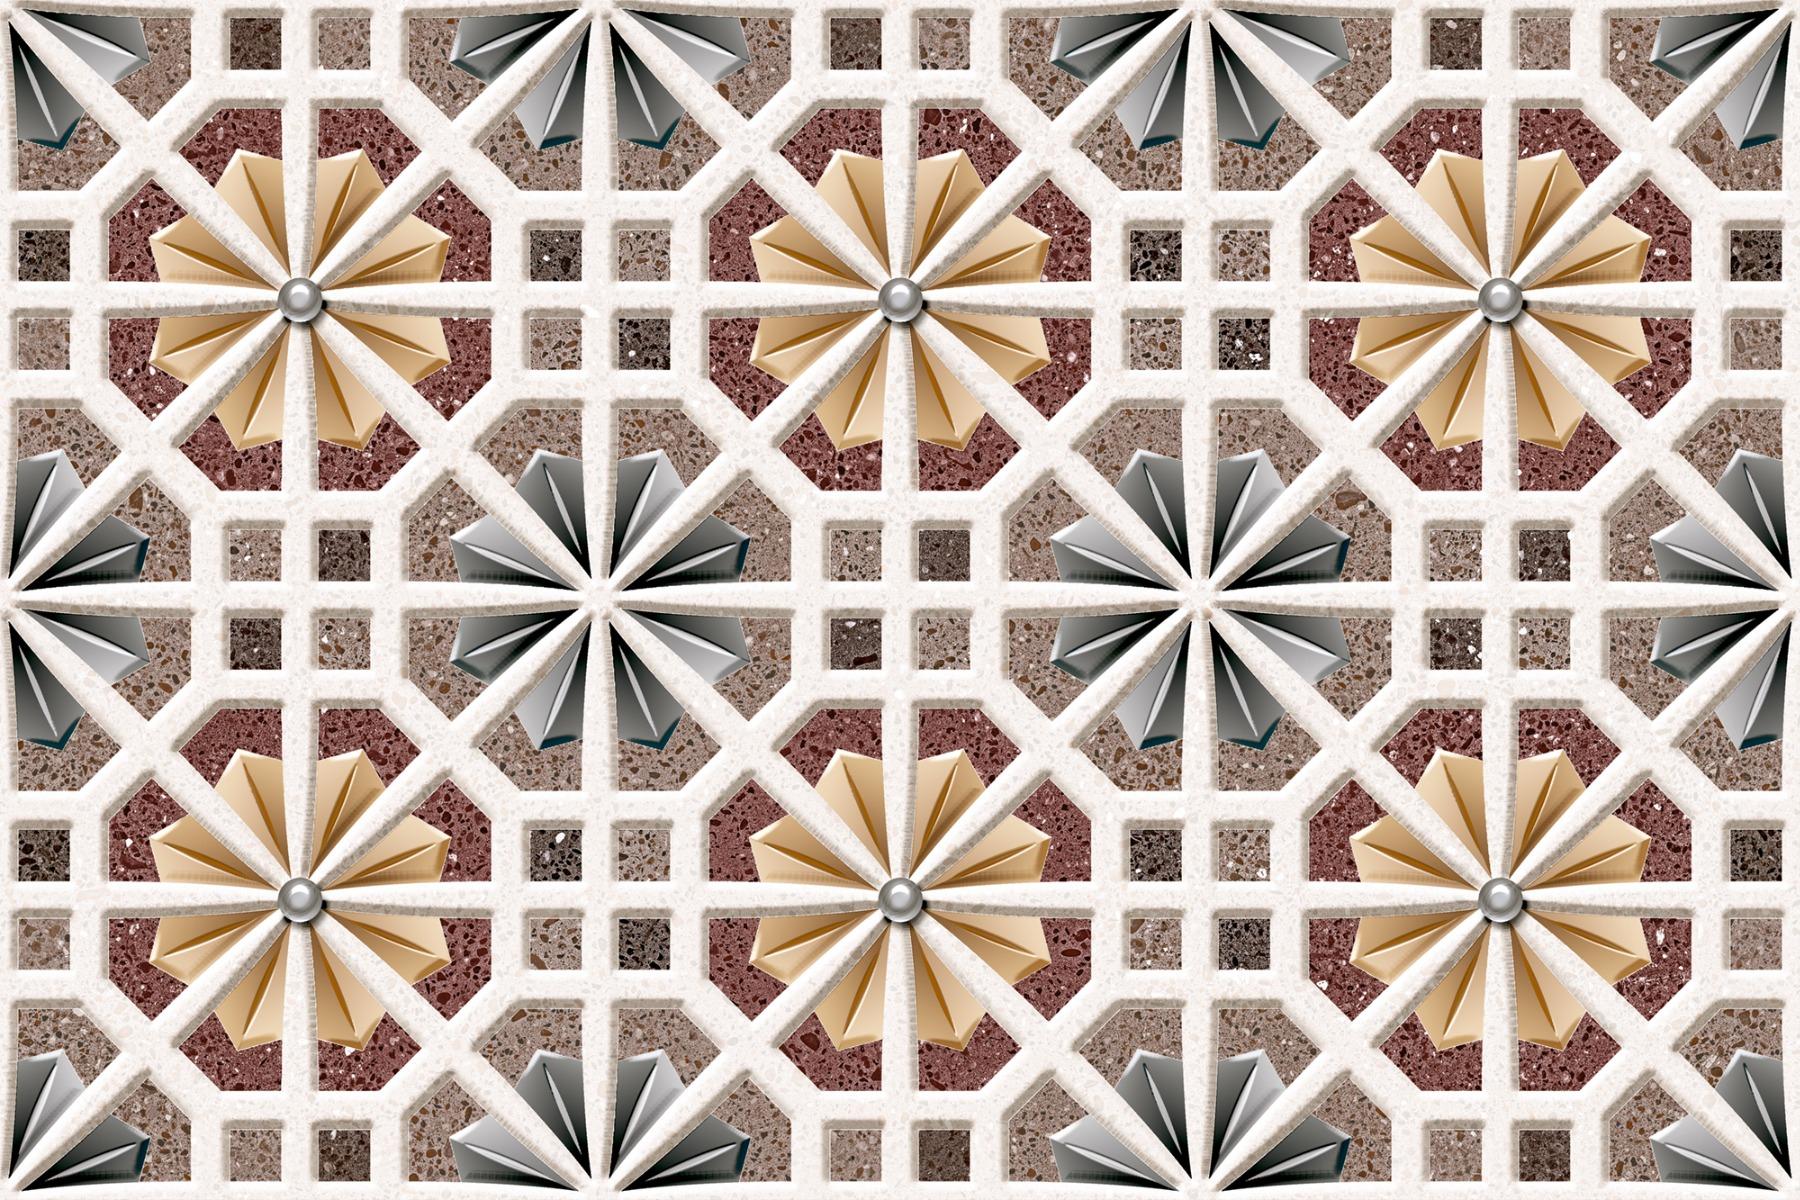 Beige Tiles for Bathroom Tiles, Kitchen Tiles, Balcony Tiles